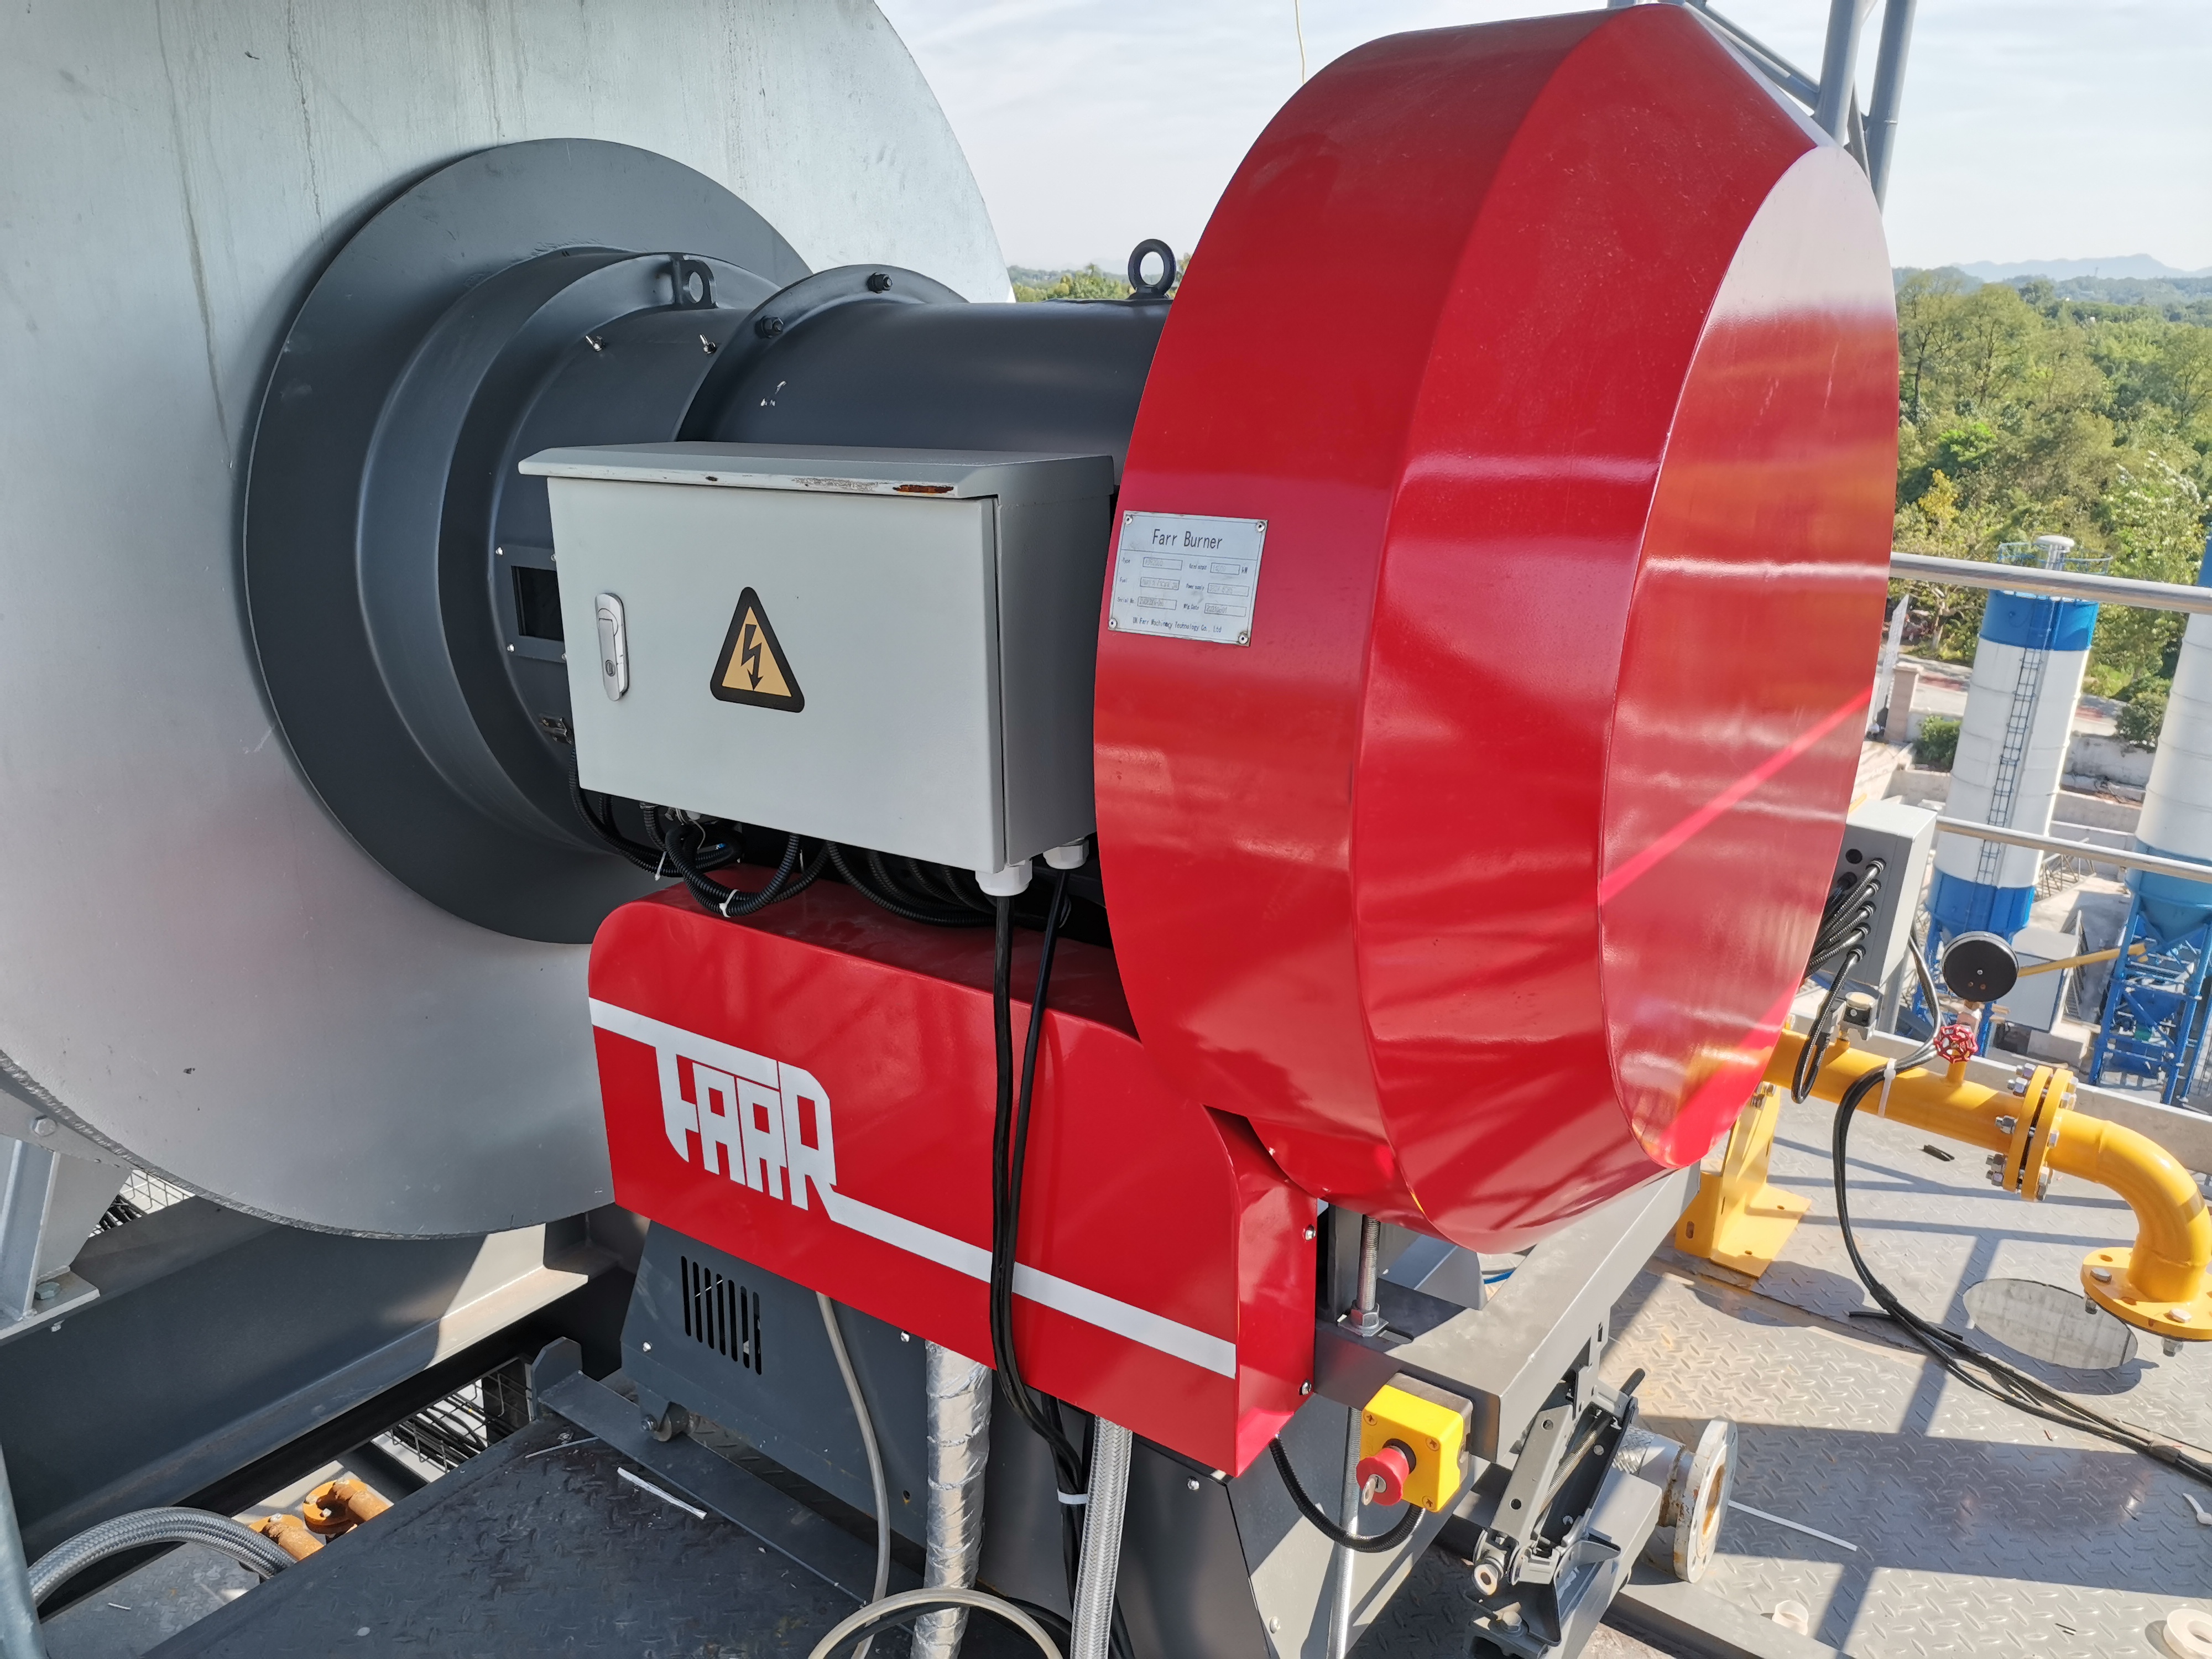 Industrial boiler burner waste oil burner thermal control system Farr machinery